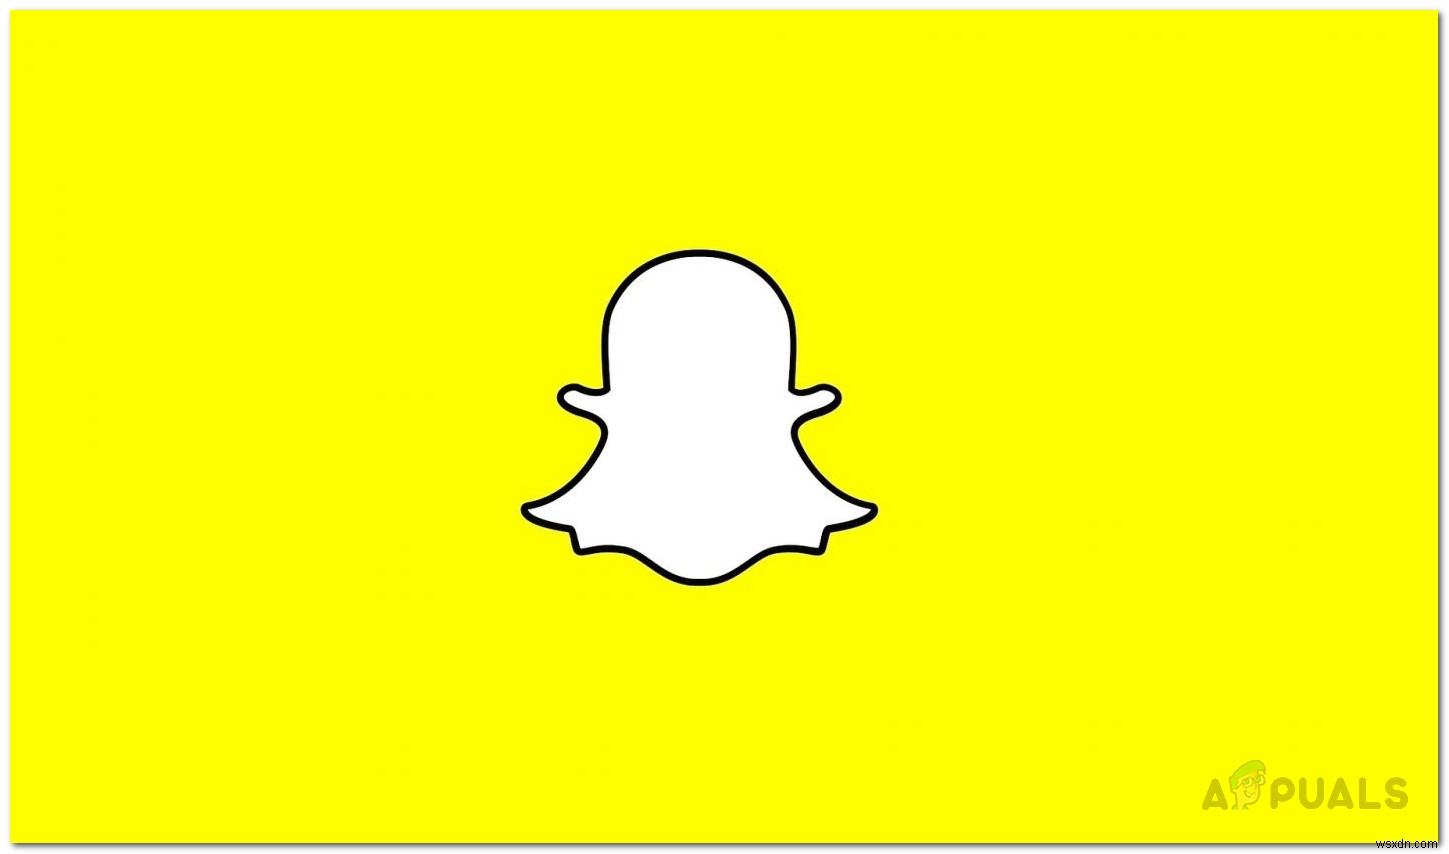 Snapchat에서 비공개 스토리를 만드는 방법은 무엇입니까?